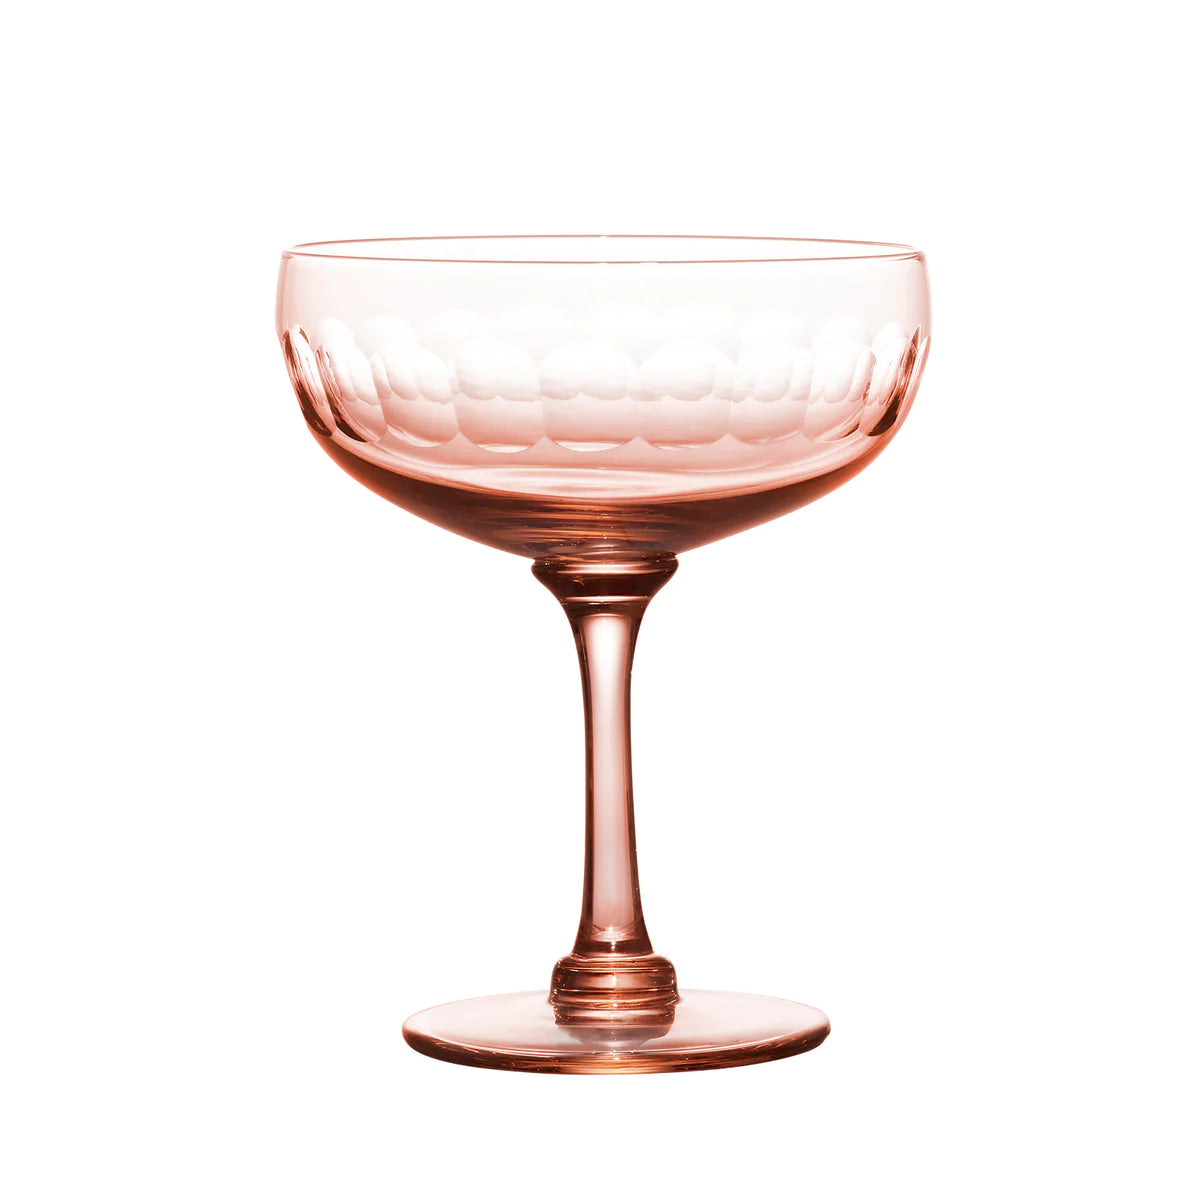 Rose Cocktail Glasses With Lens Design, Set of 4